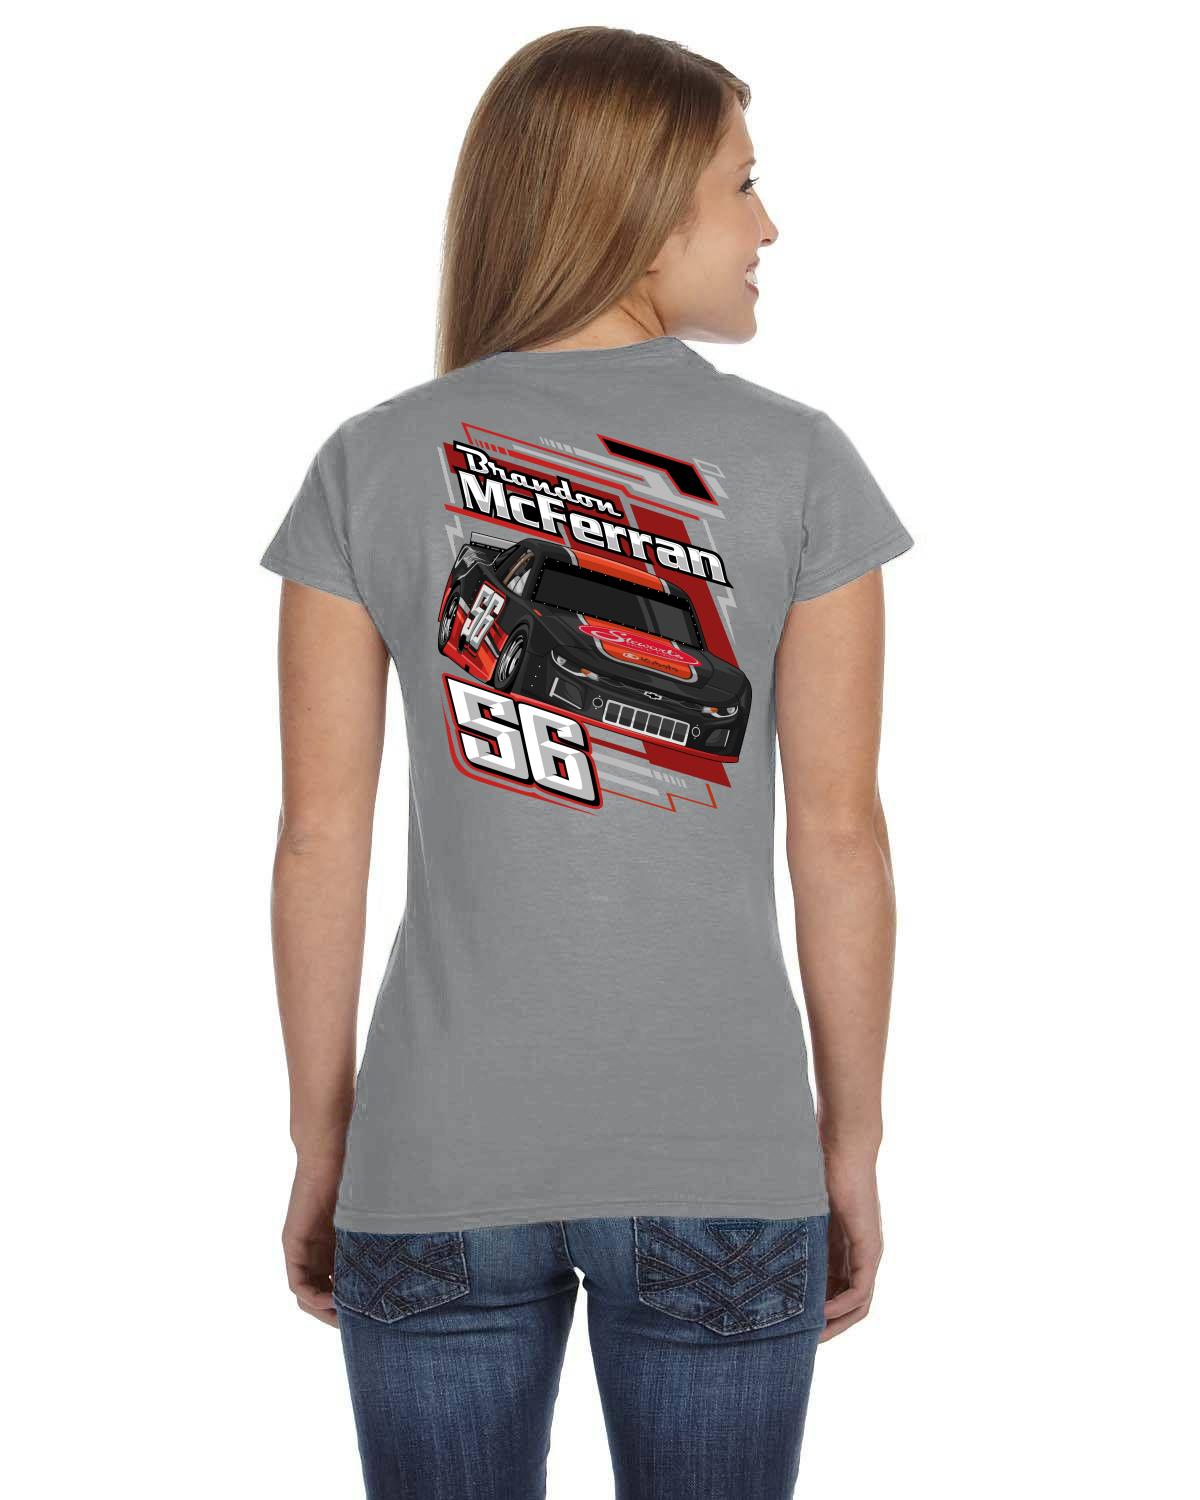 Brandon McFerran Racing Ladies softstyle tshirt